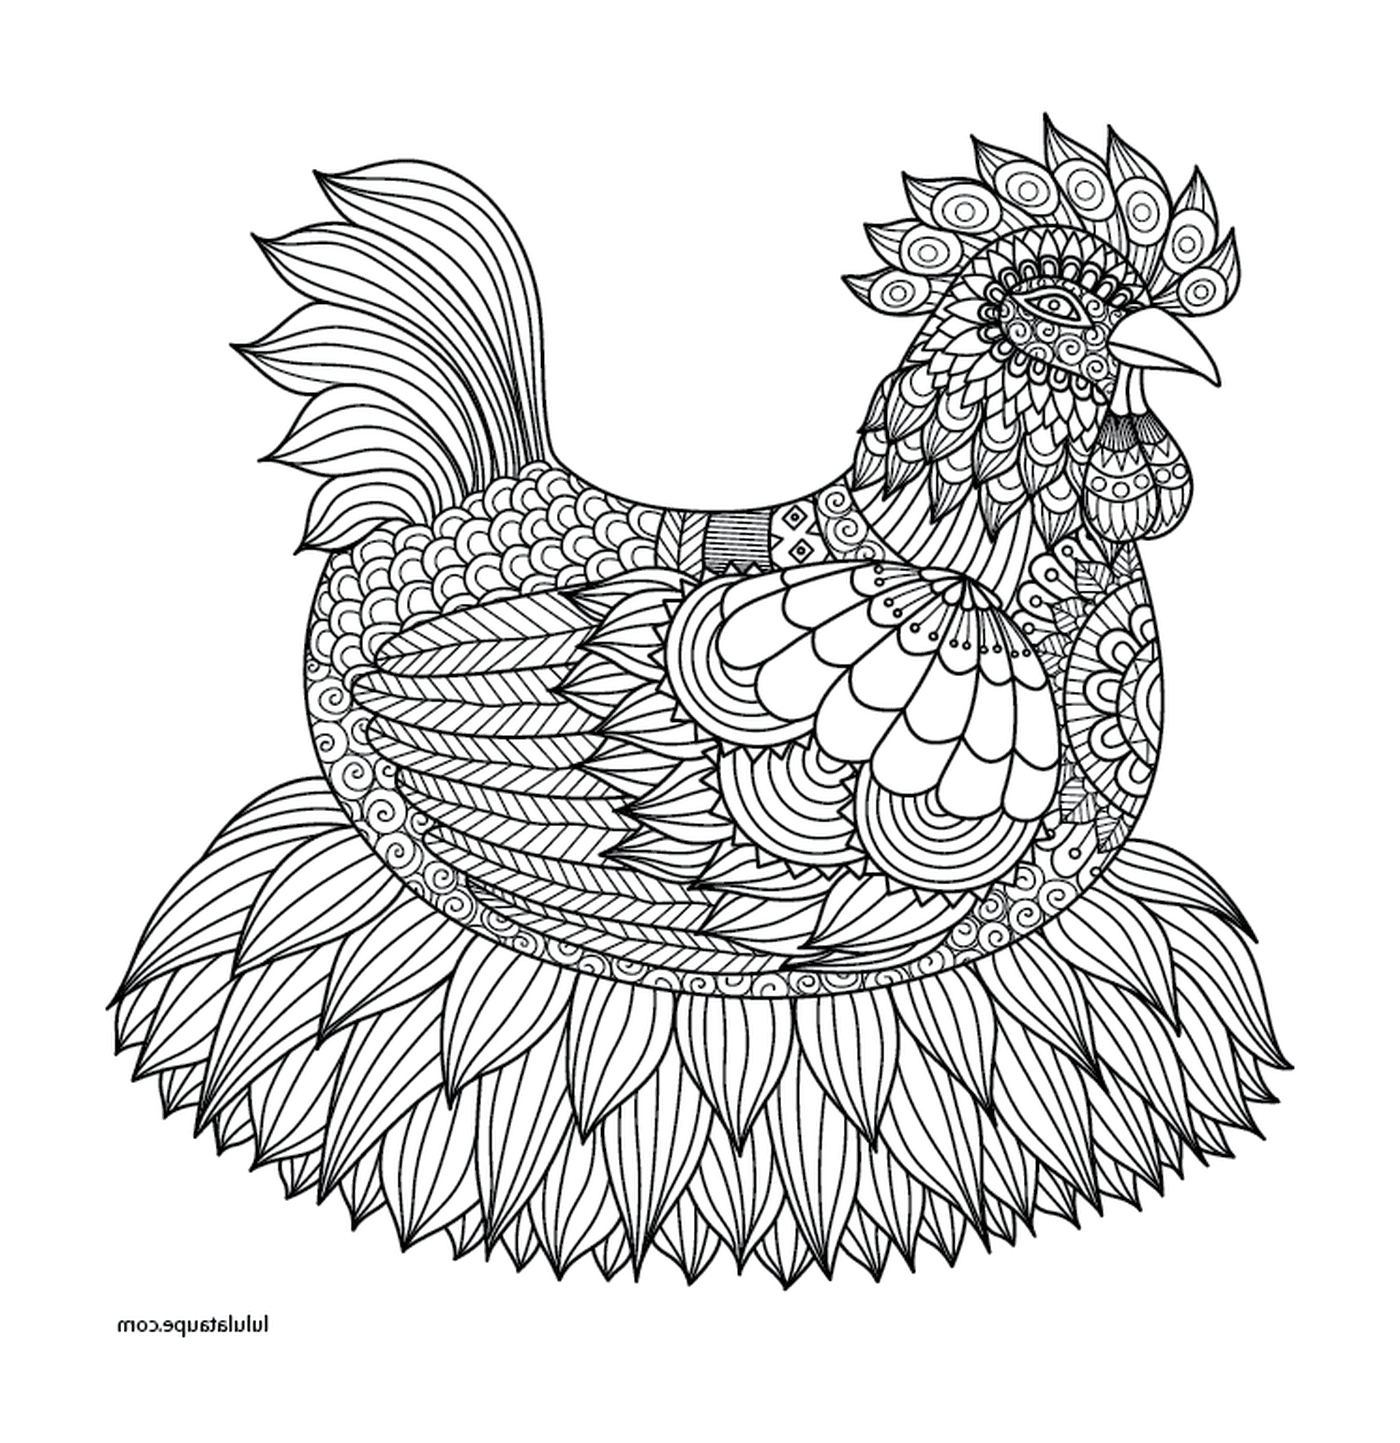  Pollo adulto elegantemente diseñado 